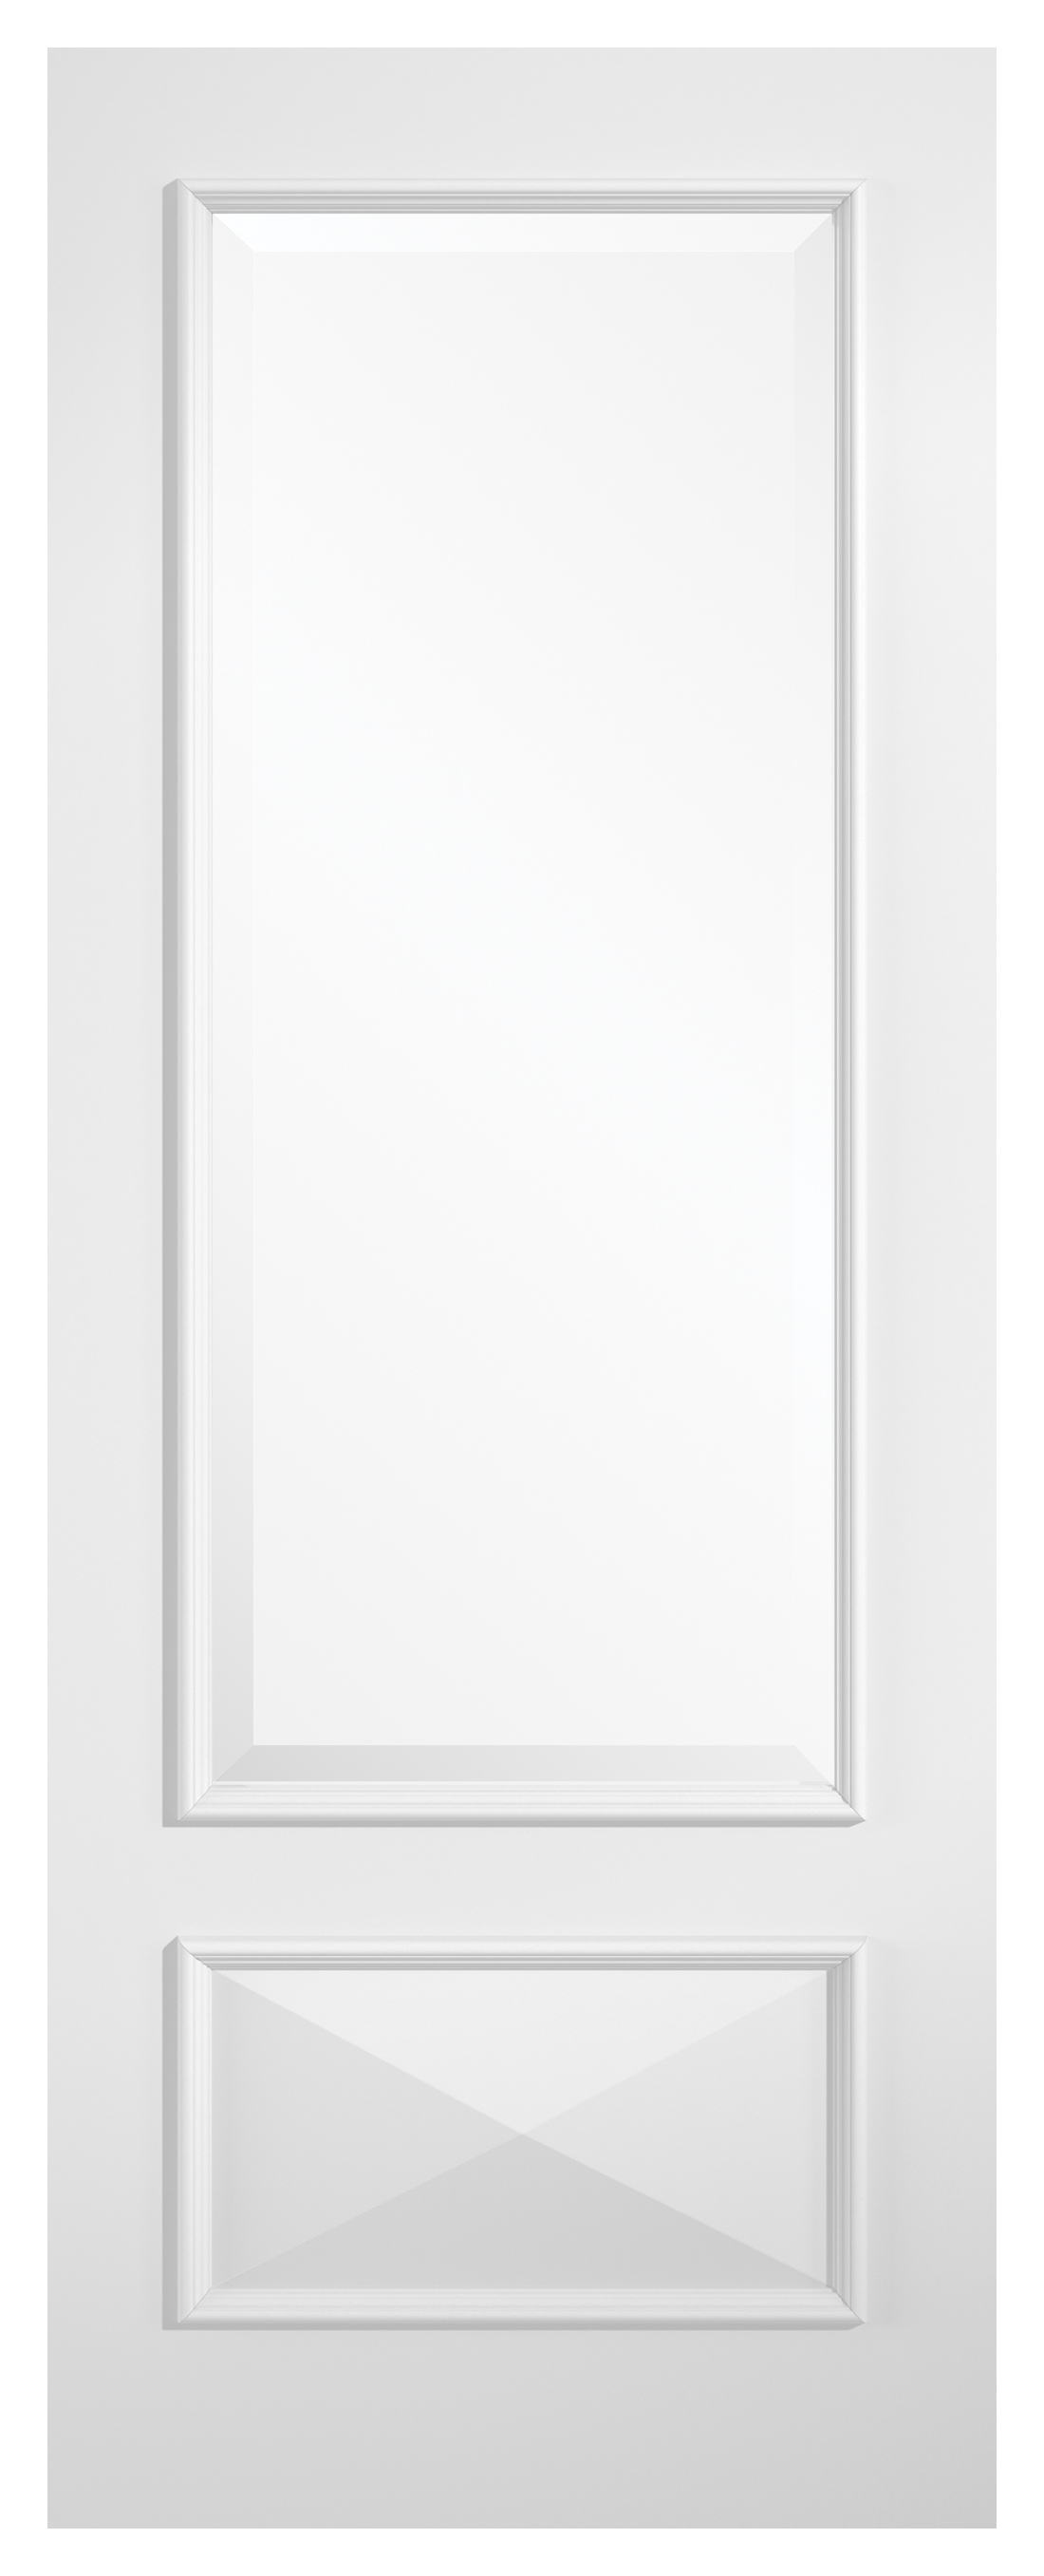 Image of LPD Internal Knightsbridge 1 Panel Primed Plus White Solid Core Door - 686 x 1981mm